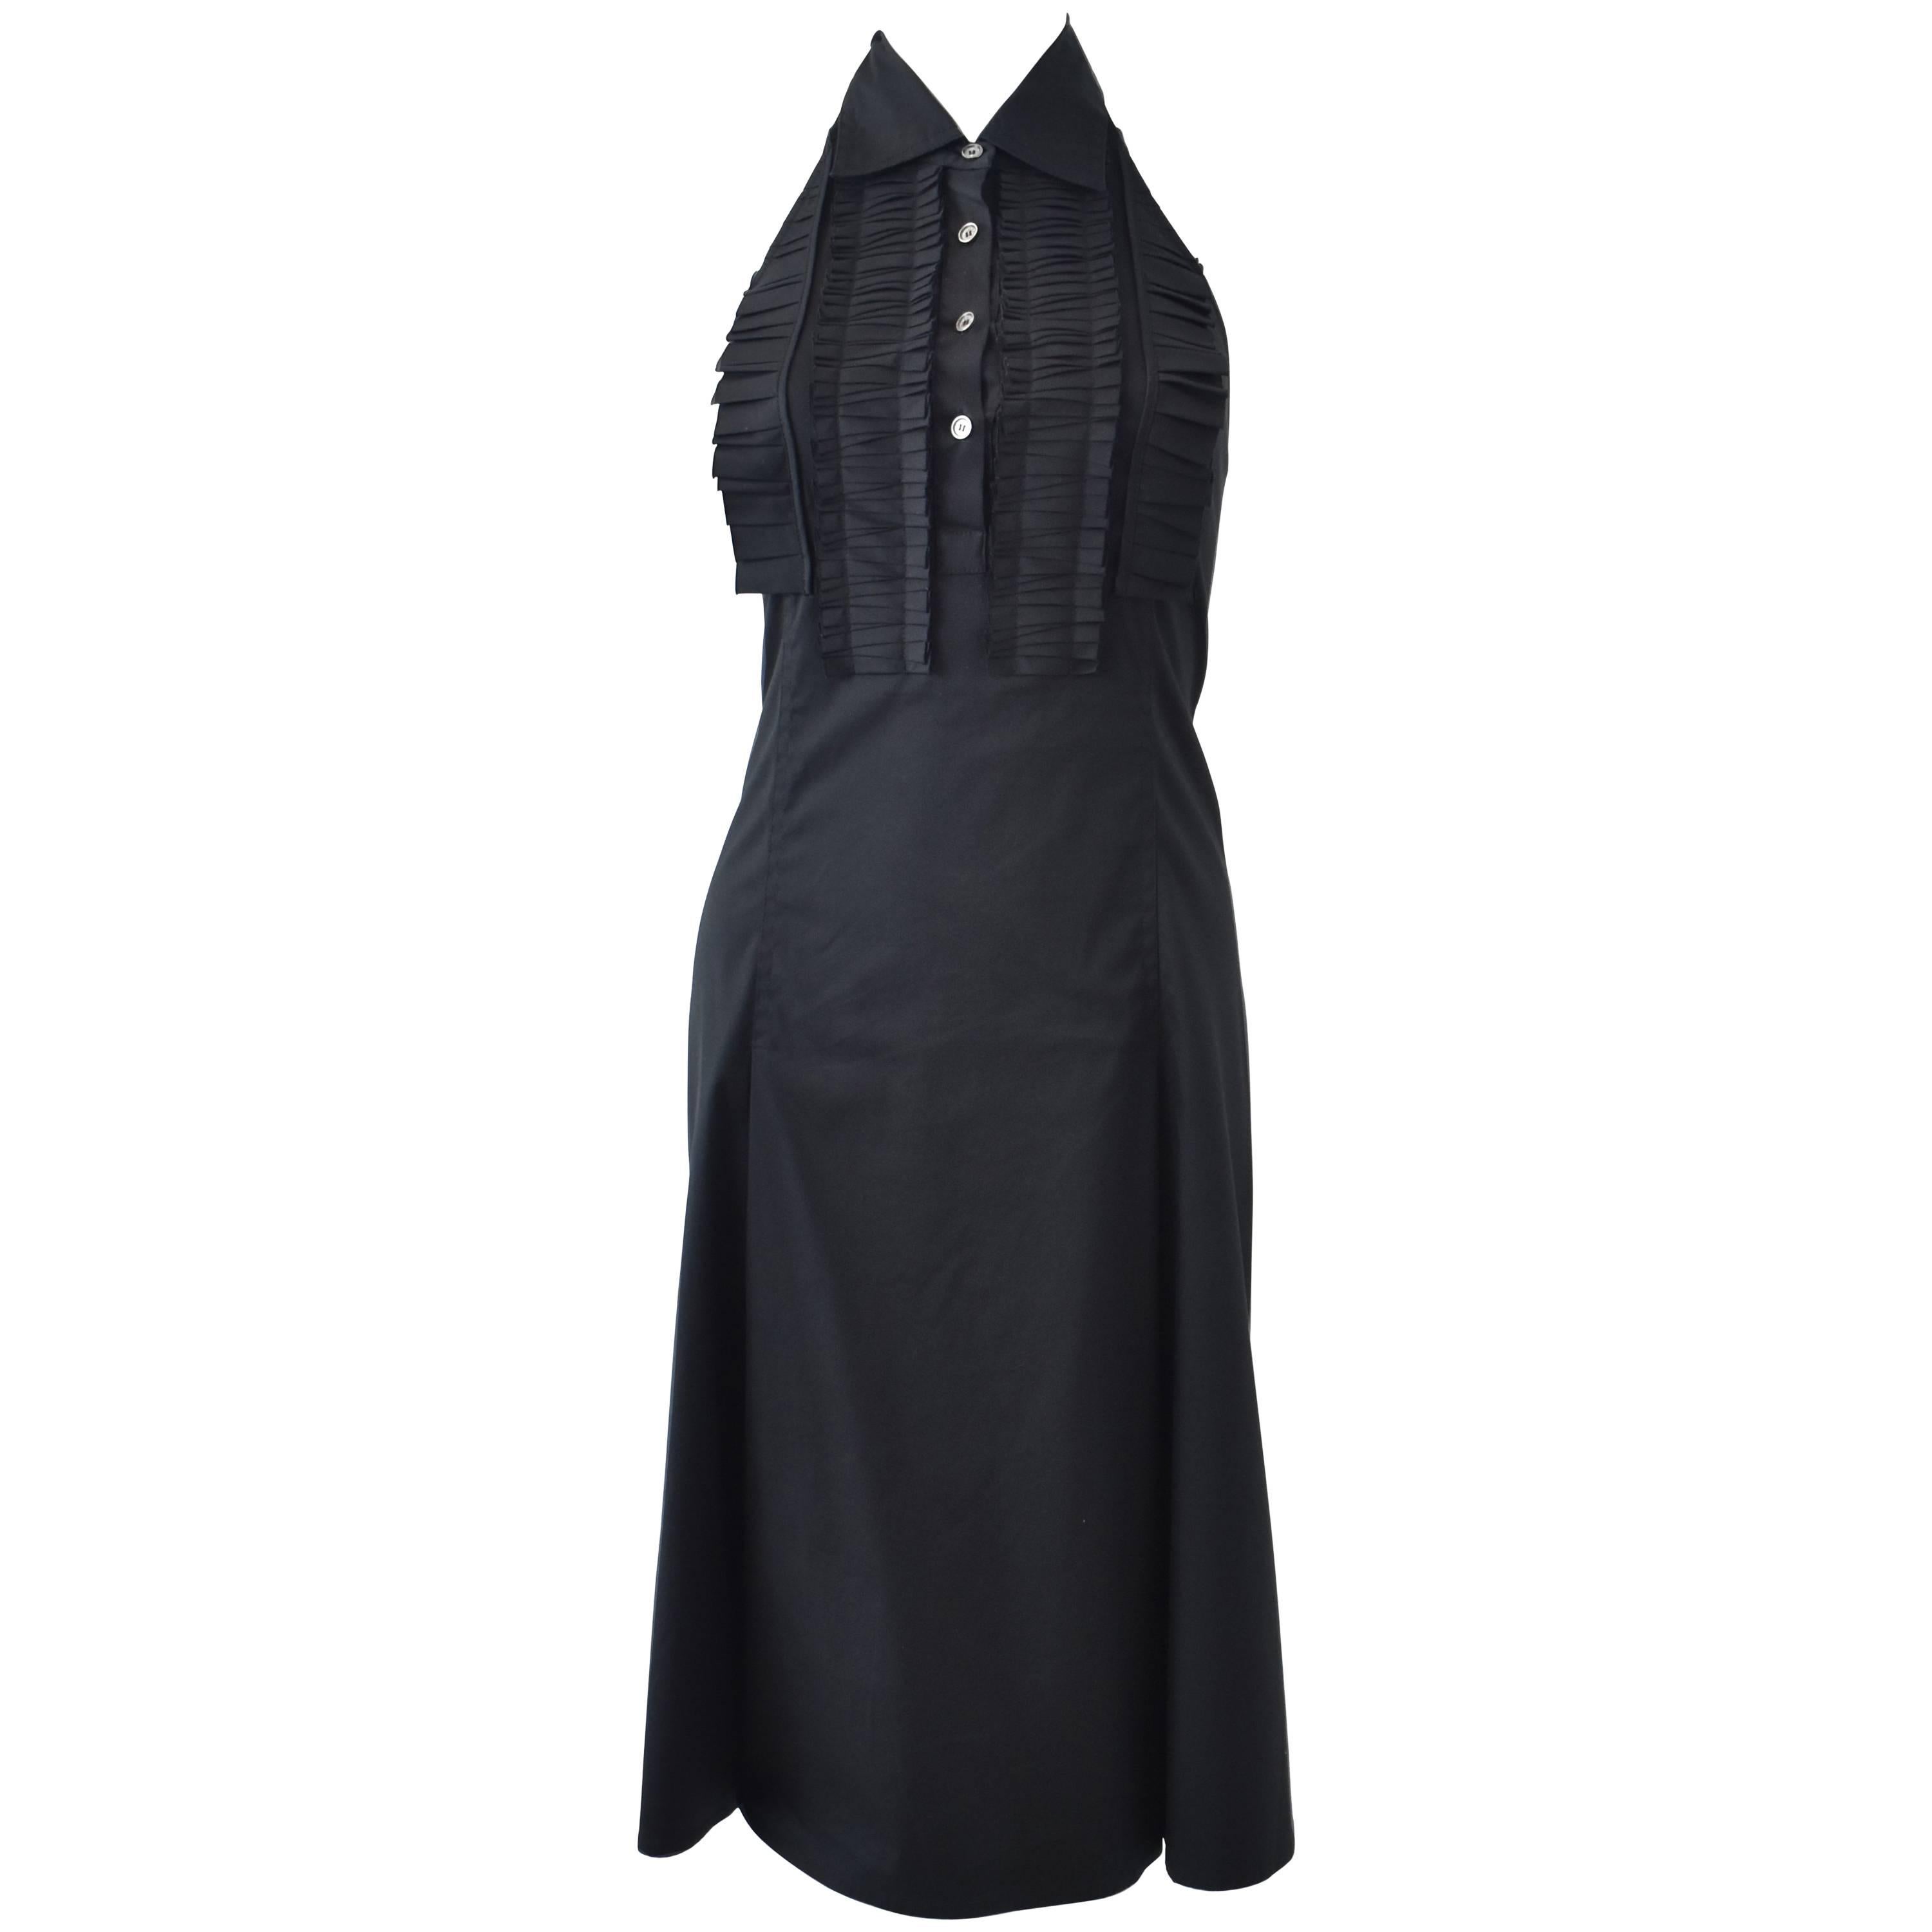 Celine Black Halterneck Dress with Collar and Ruffled Bib Front